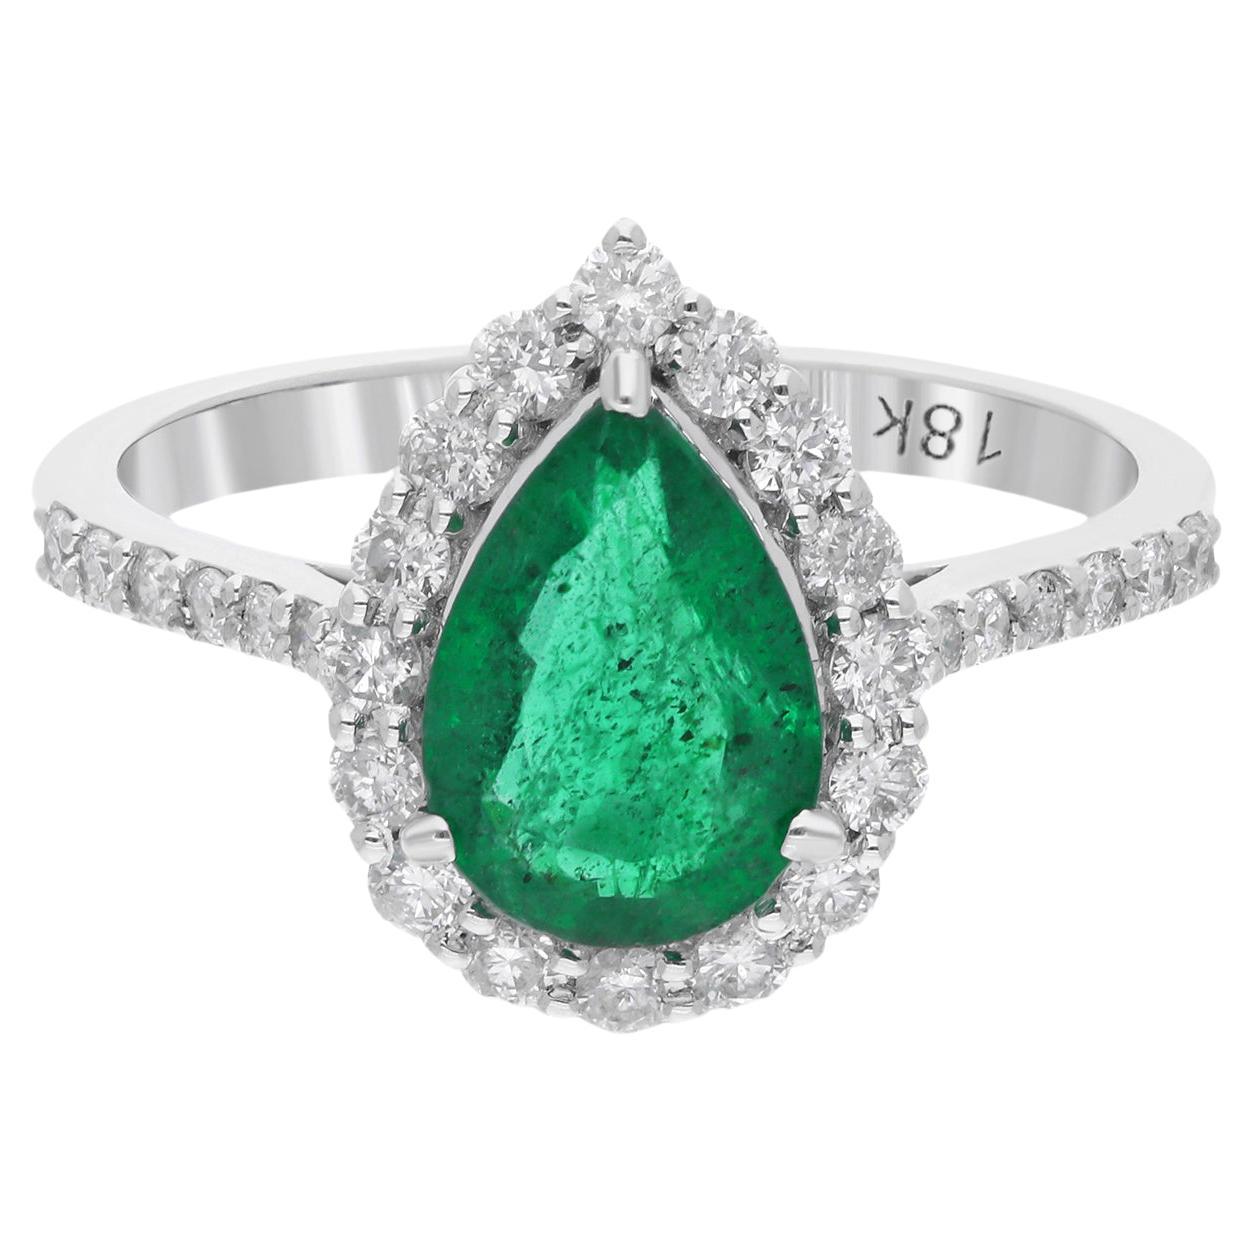 Natural Pear Zambian Emerald Gemstone Ring Diamond 18 Karat White Gold Jewelry For Sale